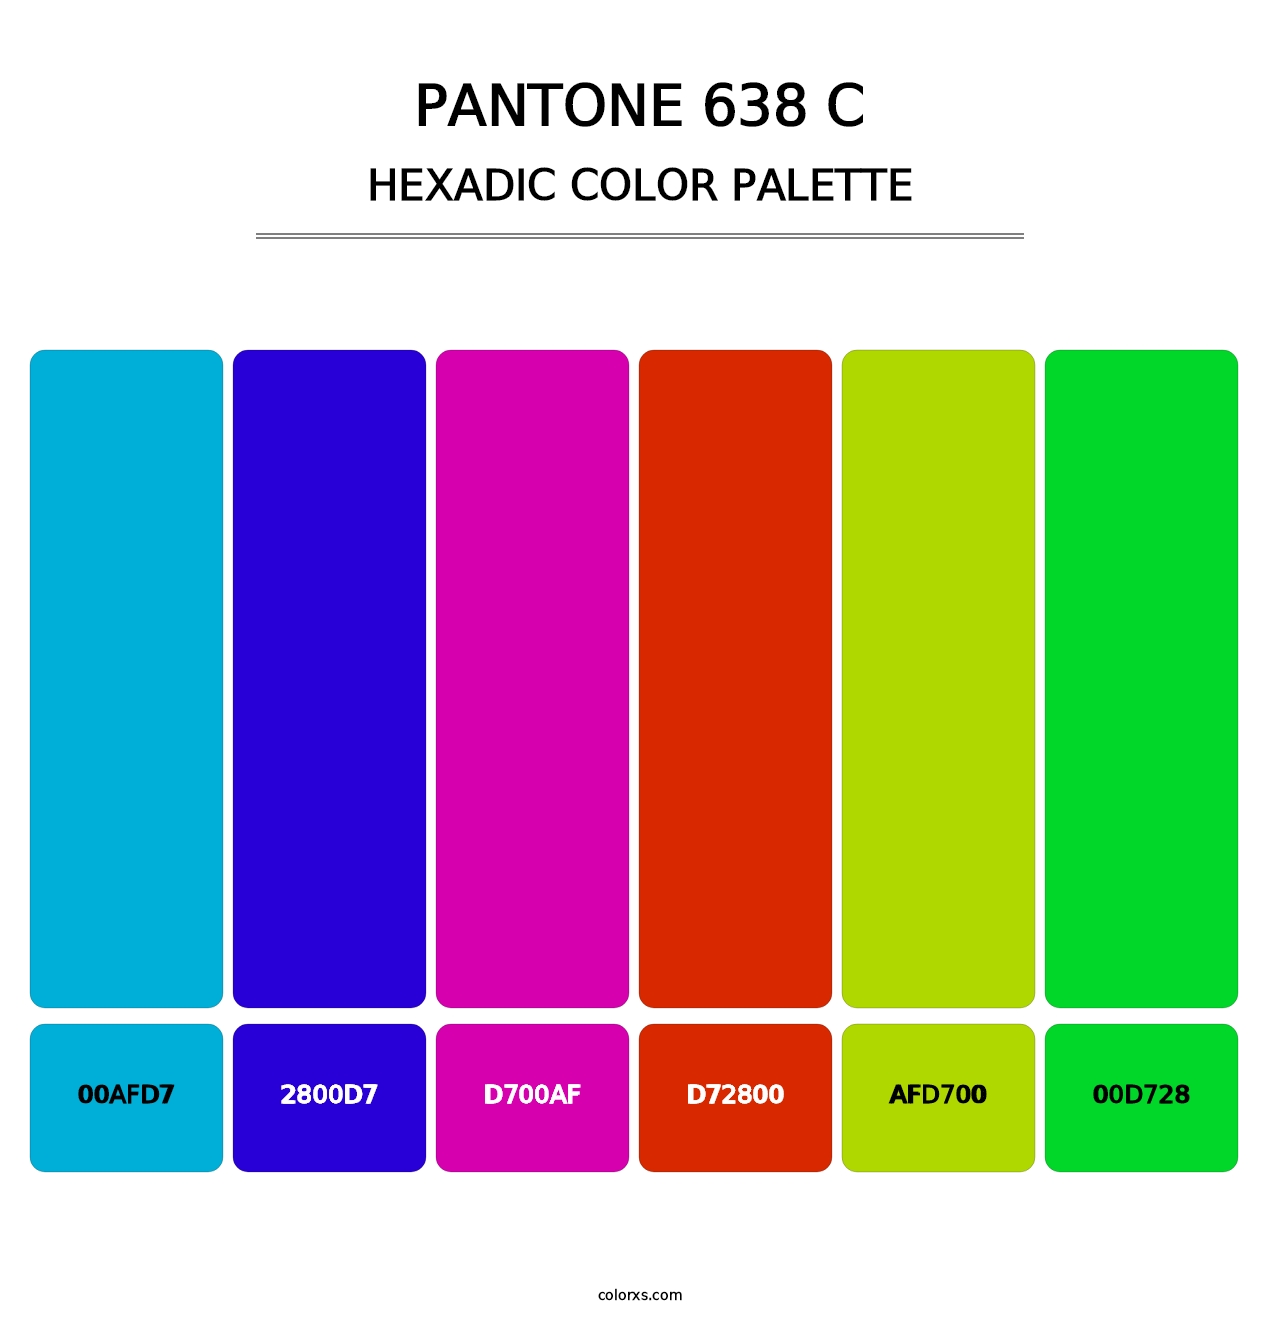 PANTONE 638 C - Hexadic Color Palette